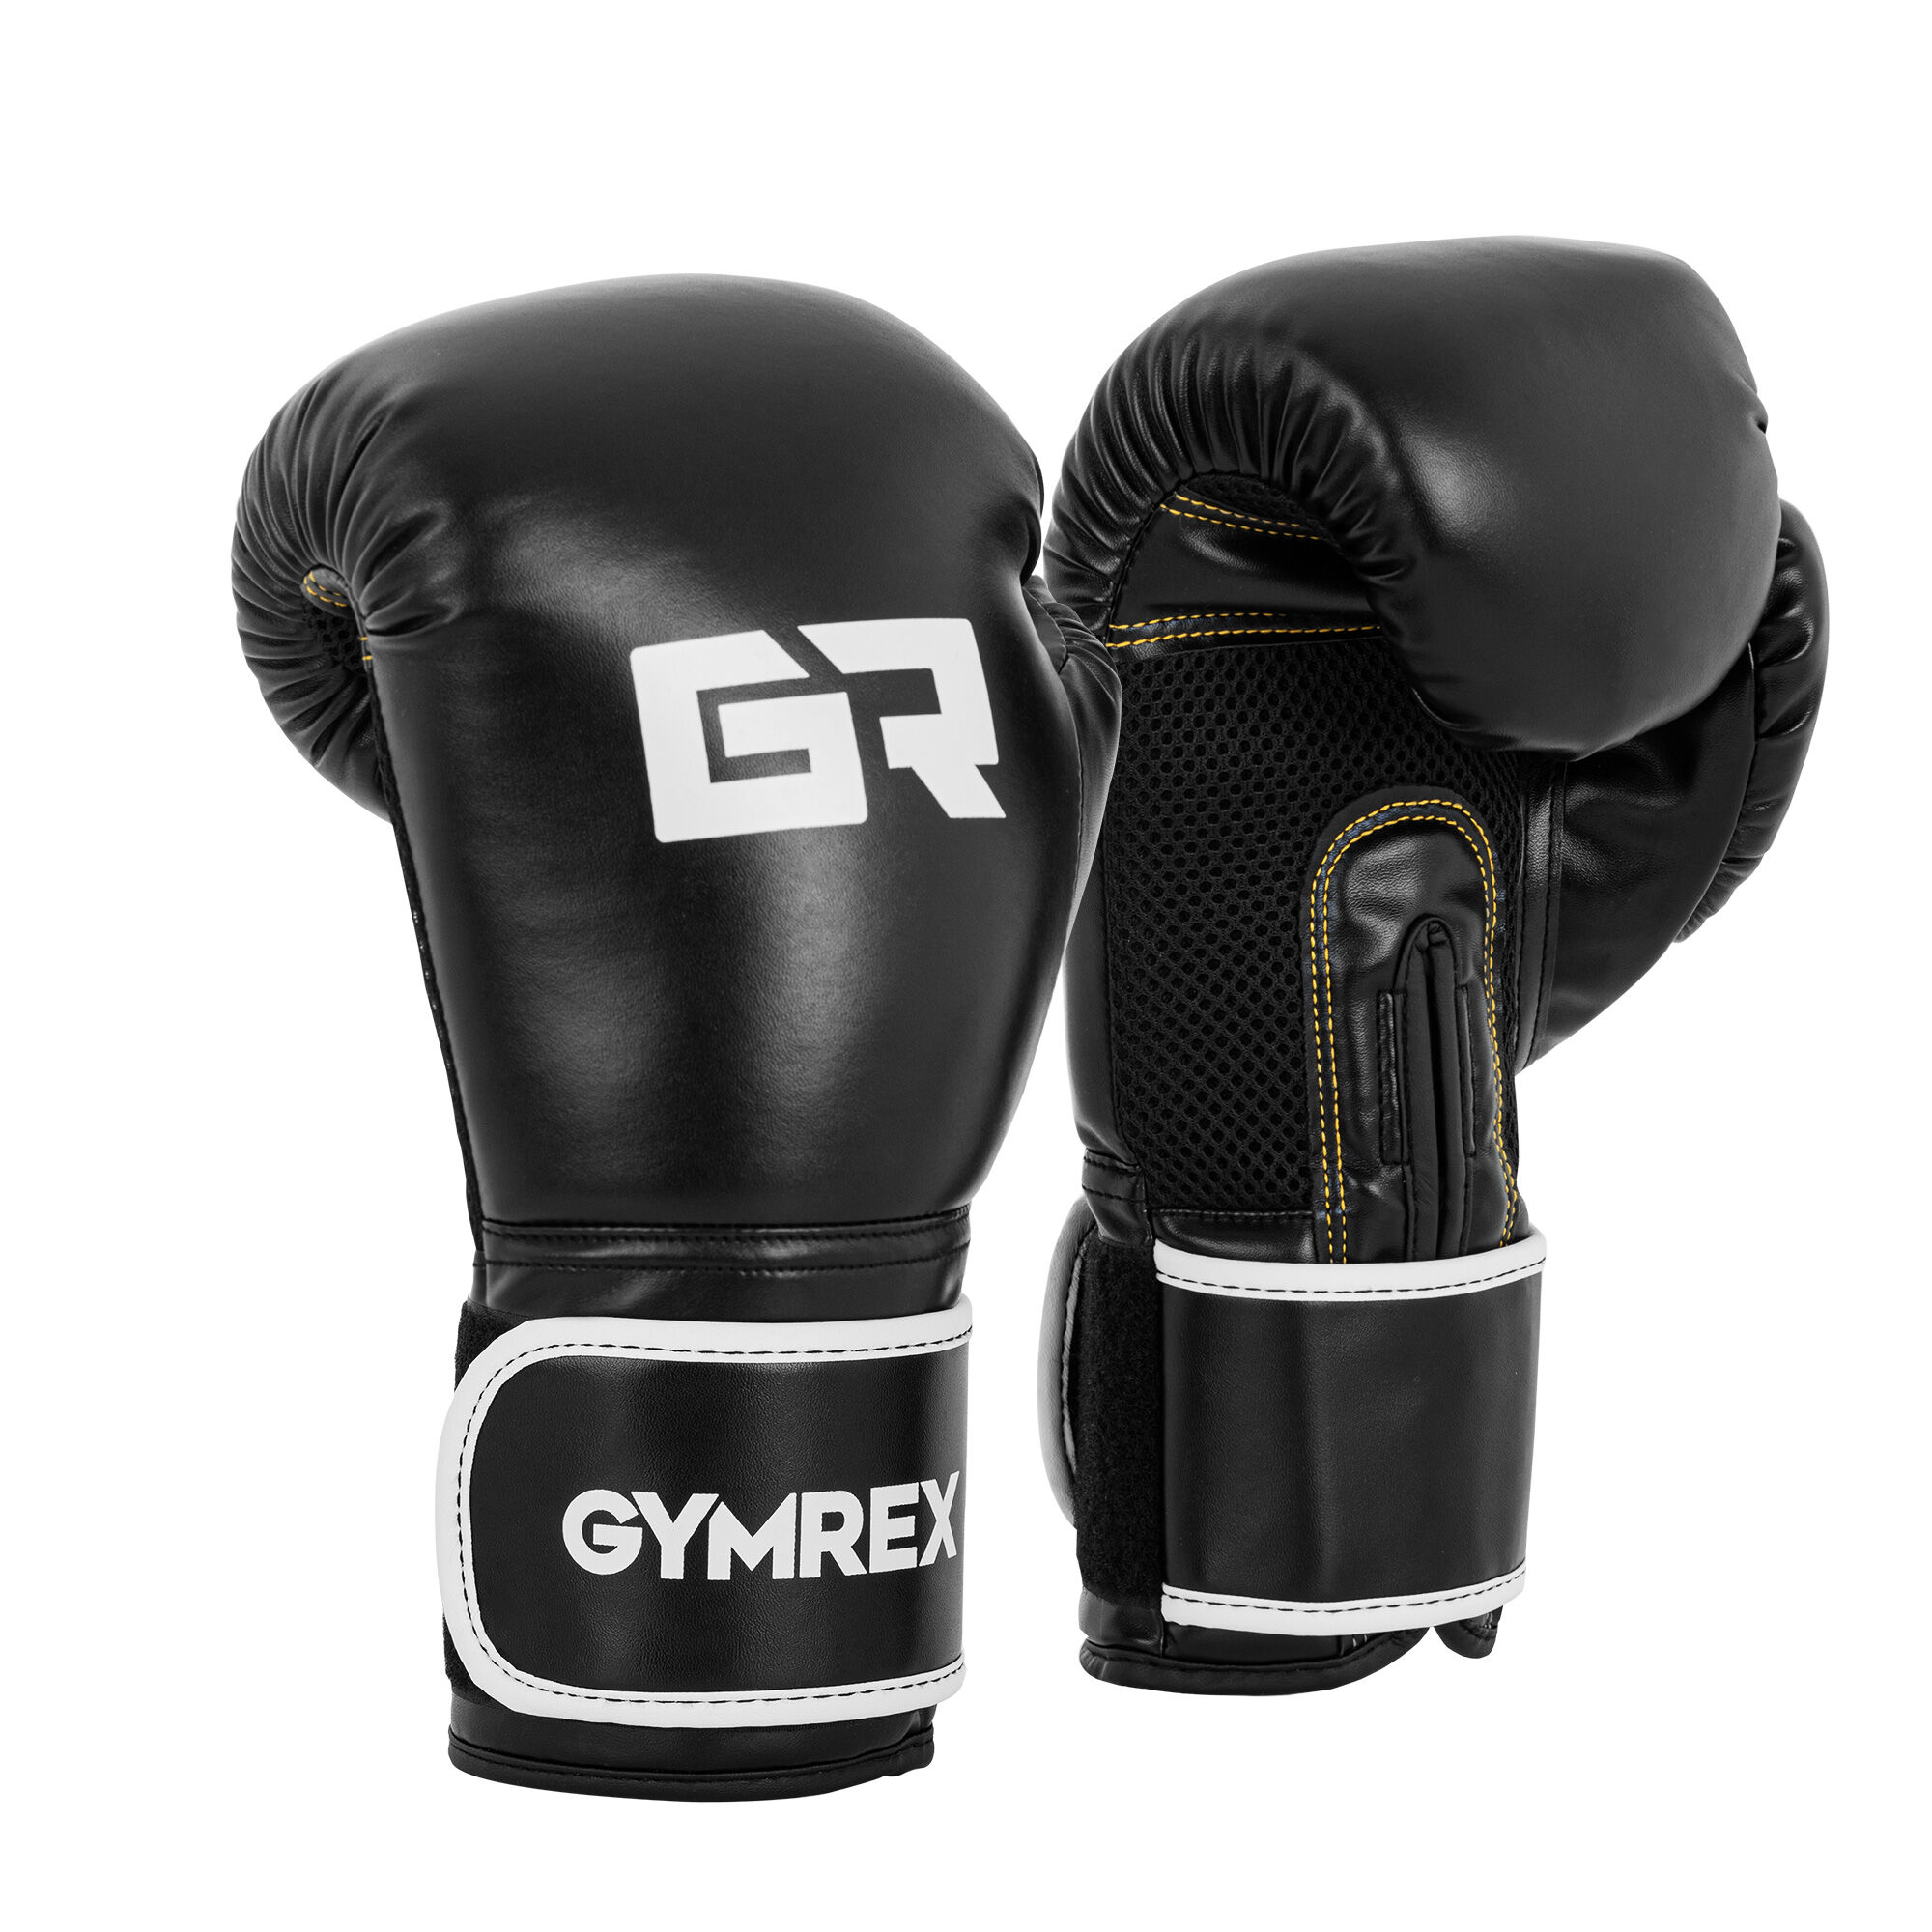 Gymrex Boxing Gloves - 12 oz - interior mesh - black